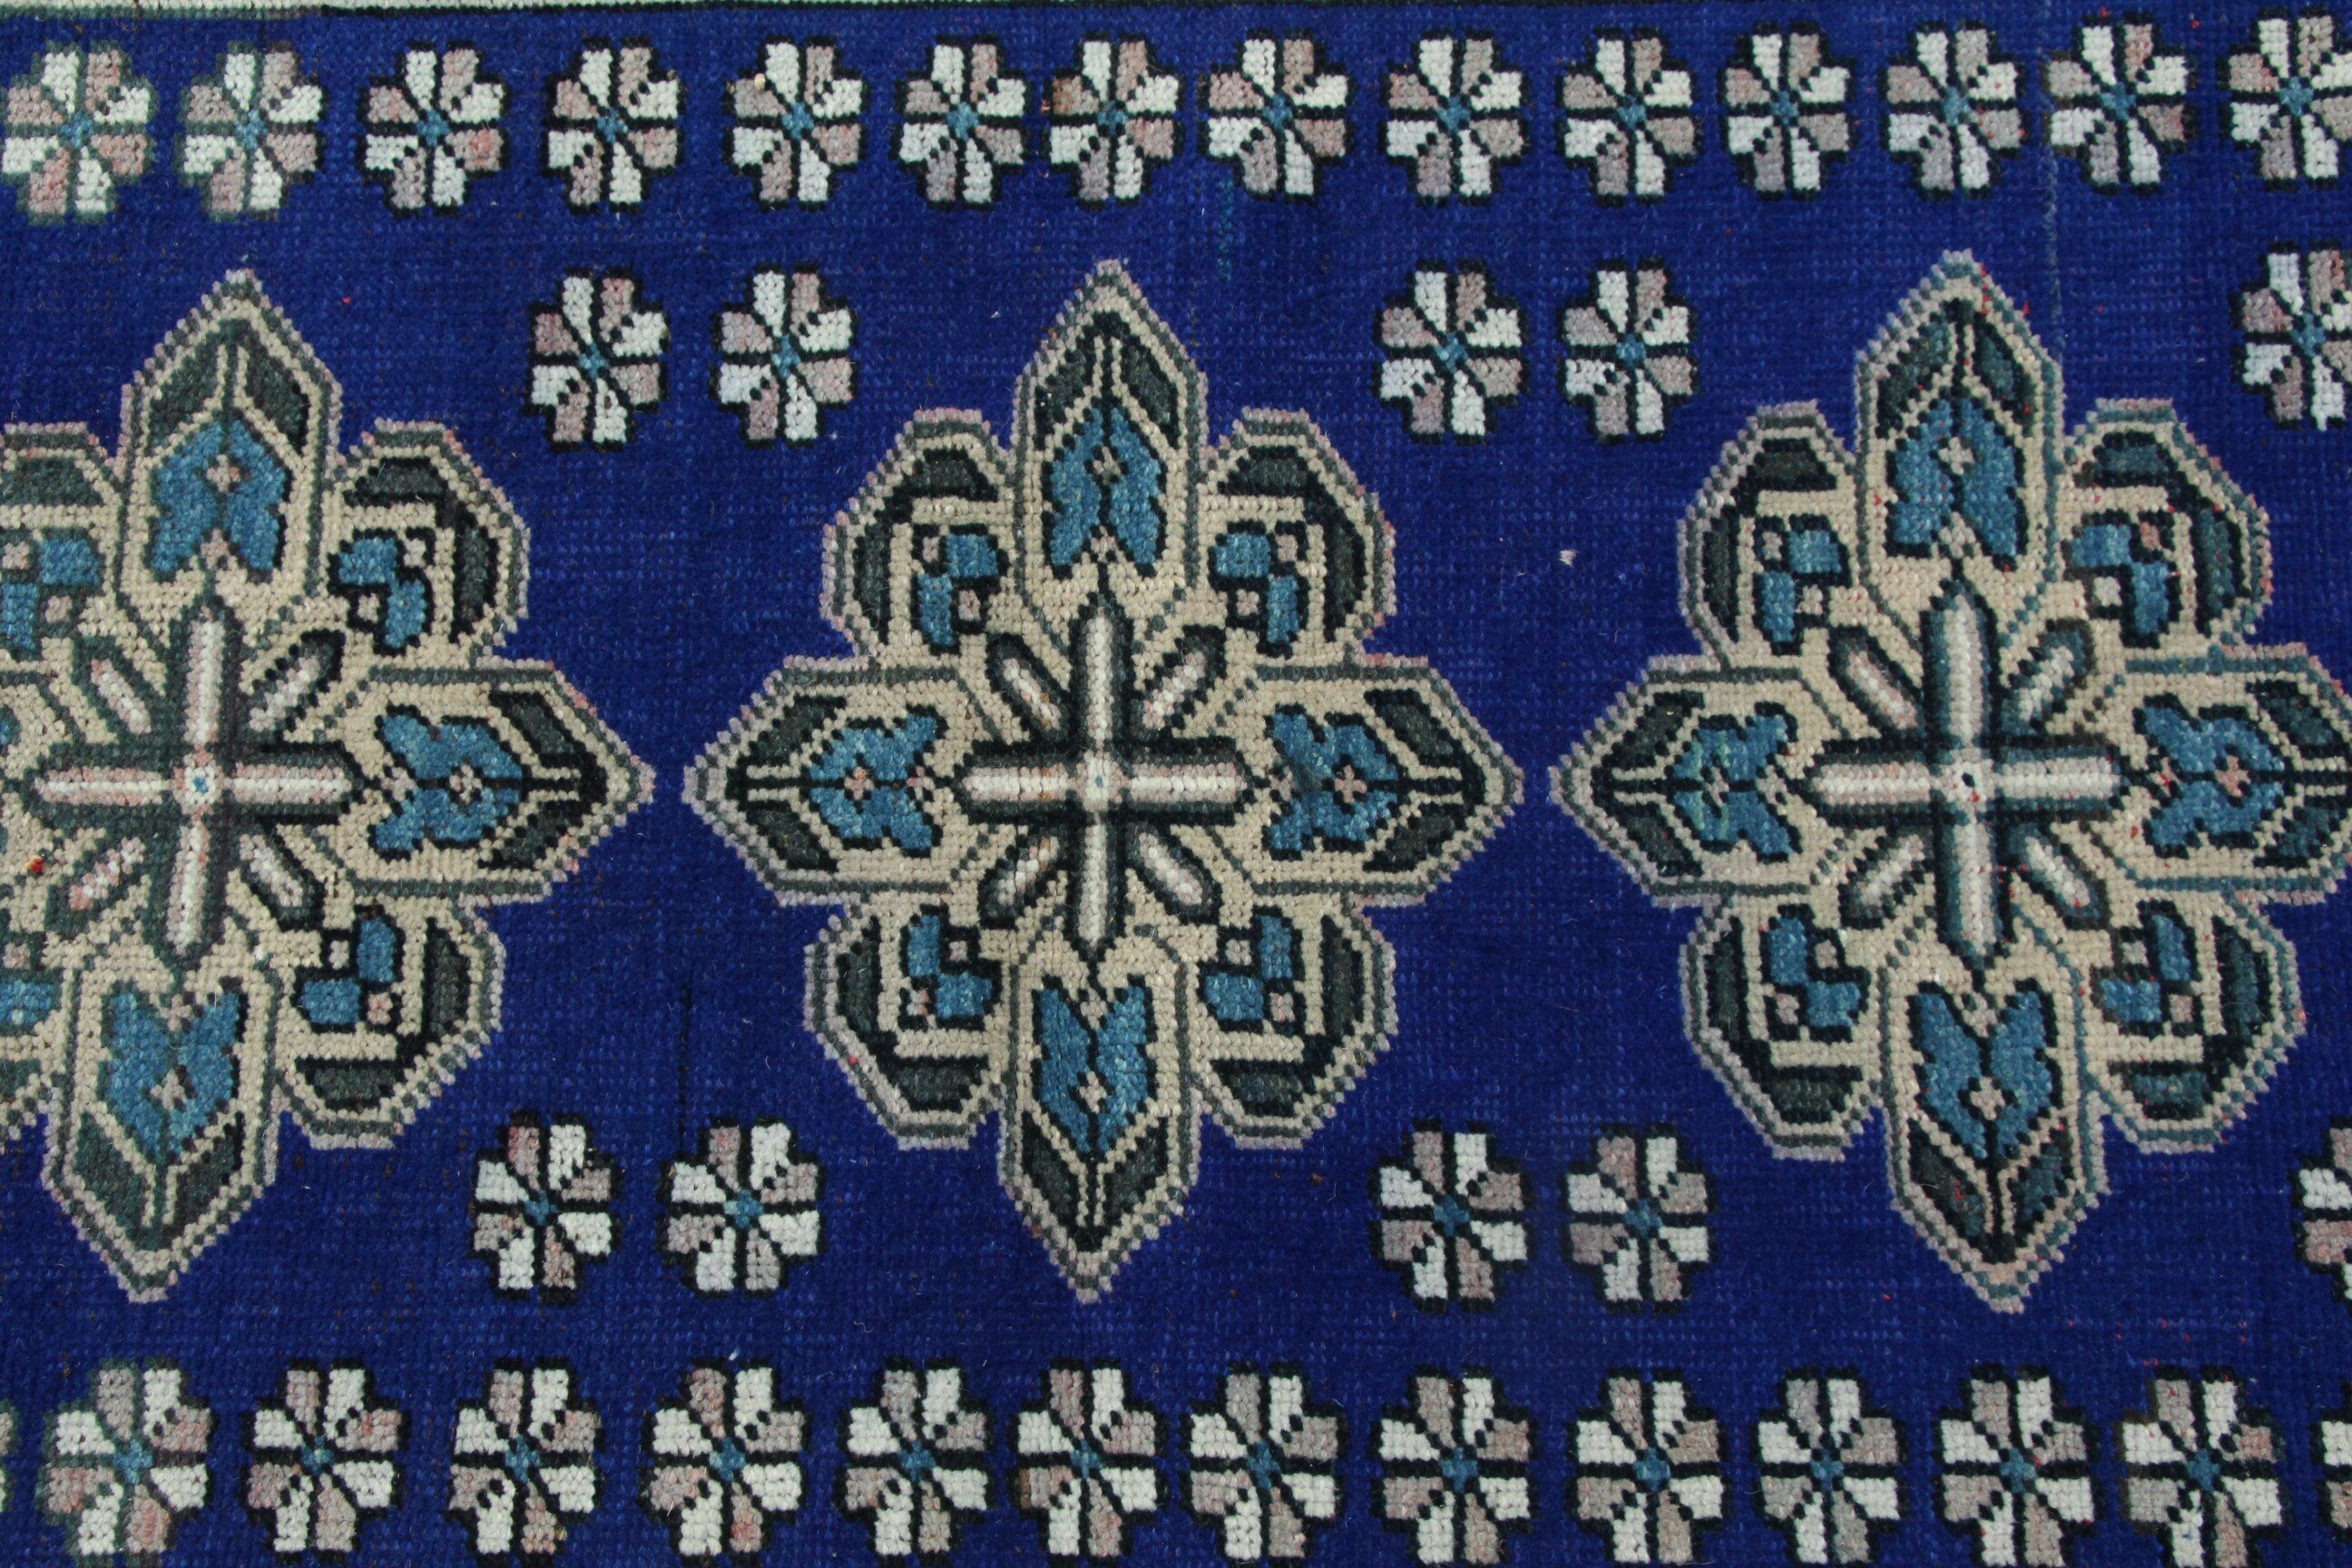 Vintage Rug, Cool Rug, Floor Rug, Art Rug, Entry Rug, Bedroom Rug, Turkish Rugs, 2.9x6.2 ft Accent Rug, Rugs for Entry, Blue Anatolian Rugs